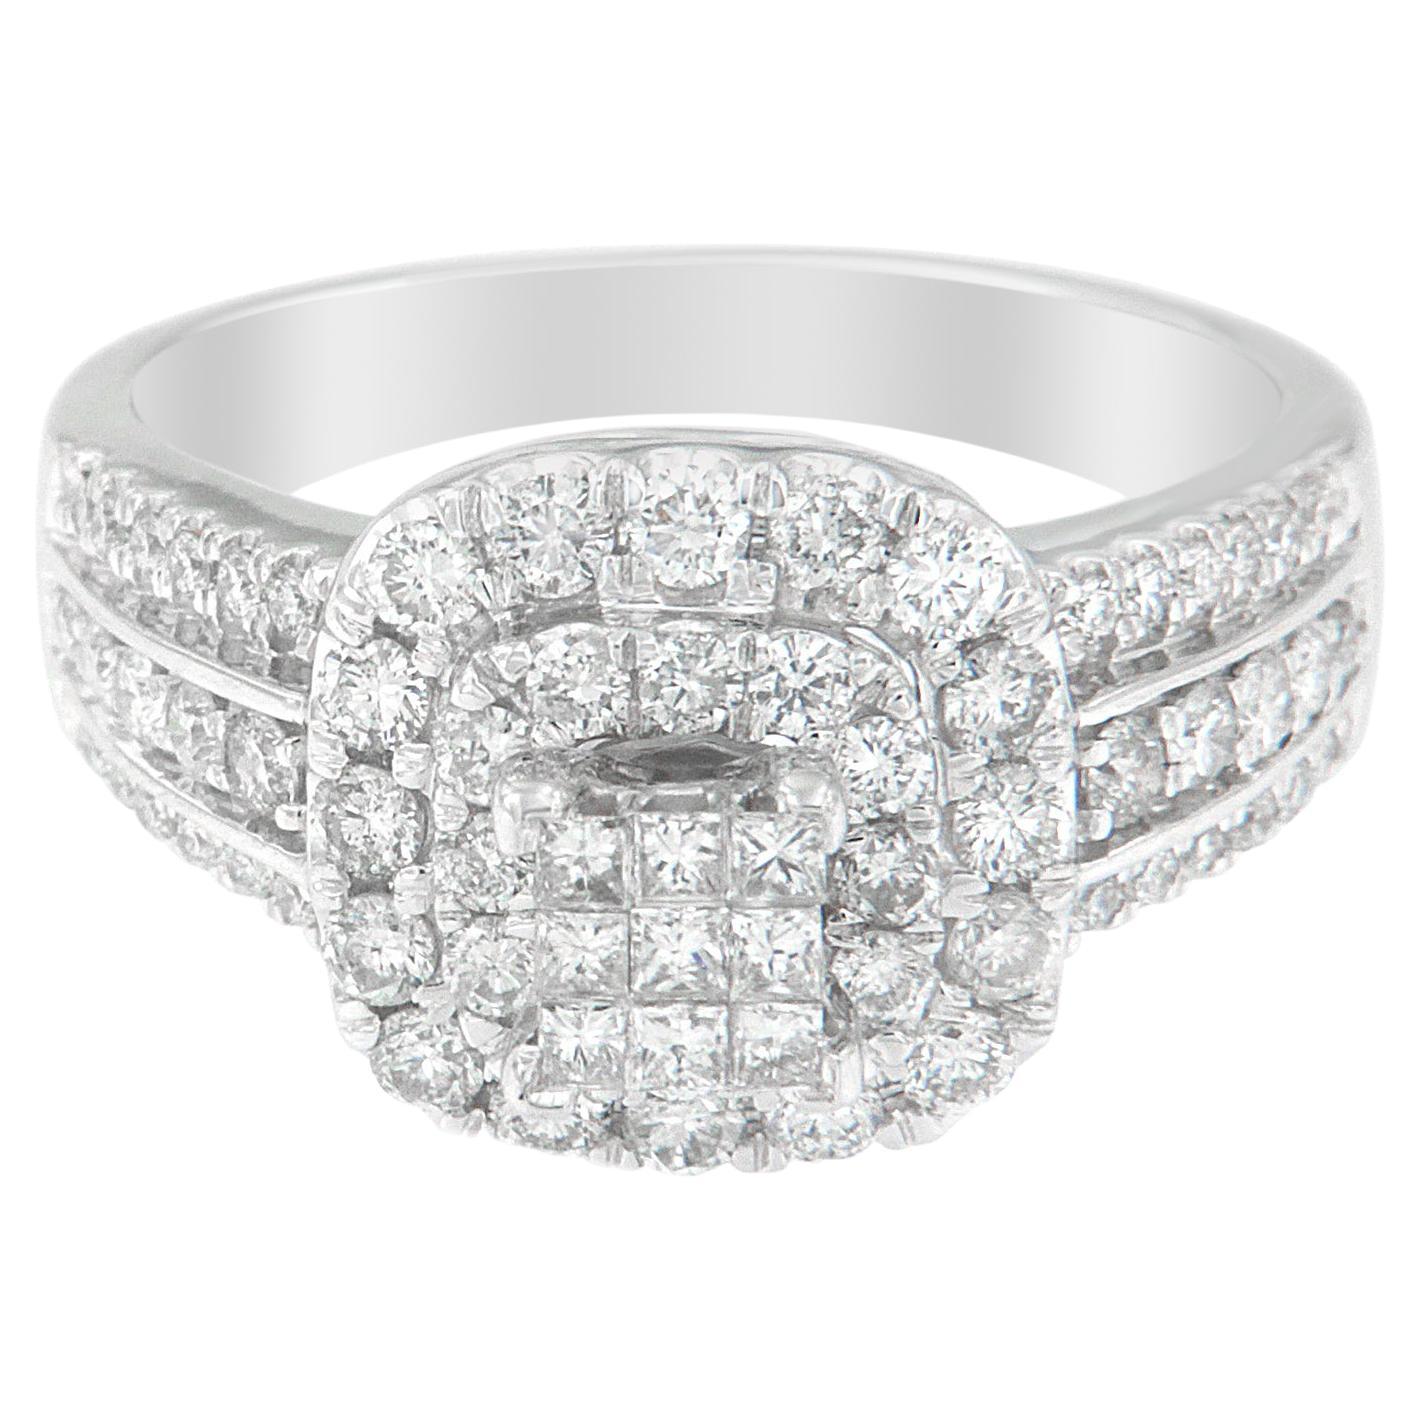 For Sale:  14K White Gold 1.00 Carat Diamond Vintage Ring